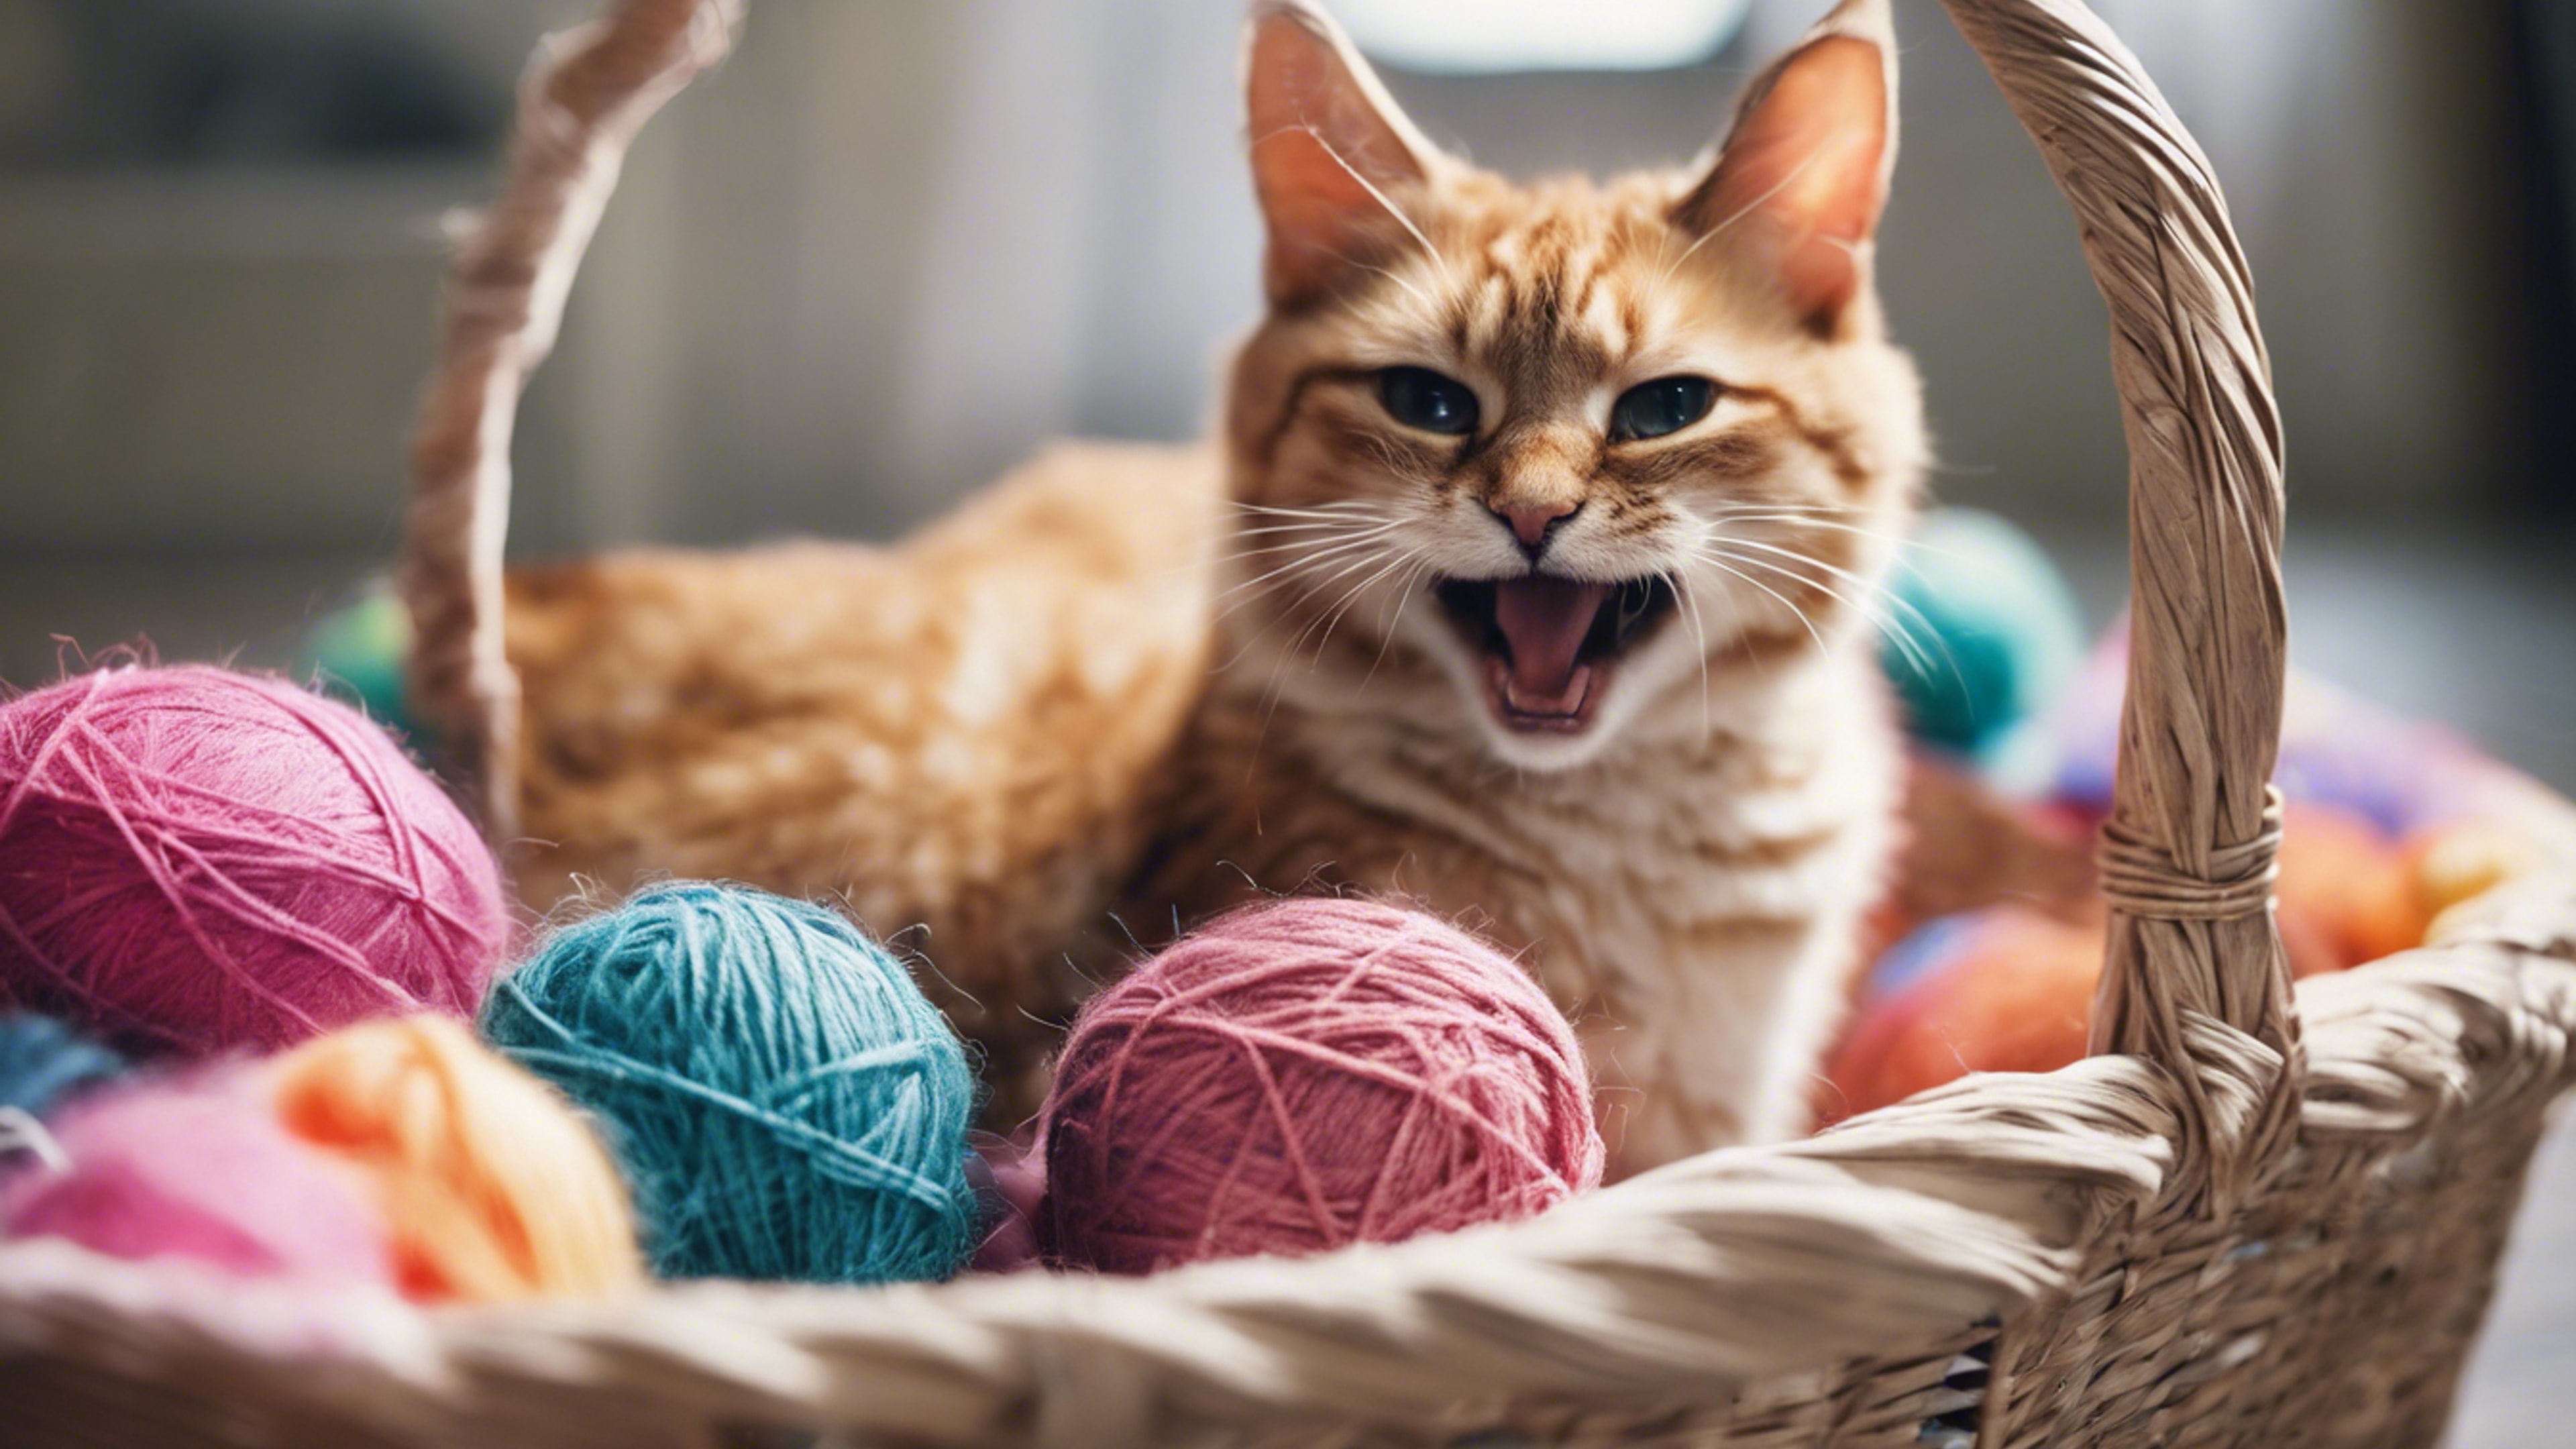 A cat mid-yawn in a basket filled with soft, colorful balls of yarn. Fondo de pantalla[4de2b2f4a75d42f7bbf8]